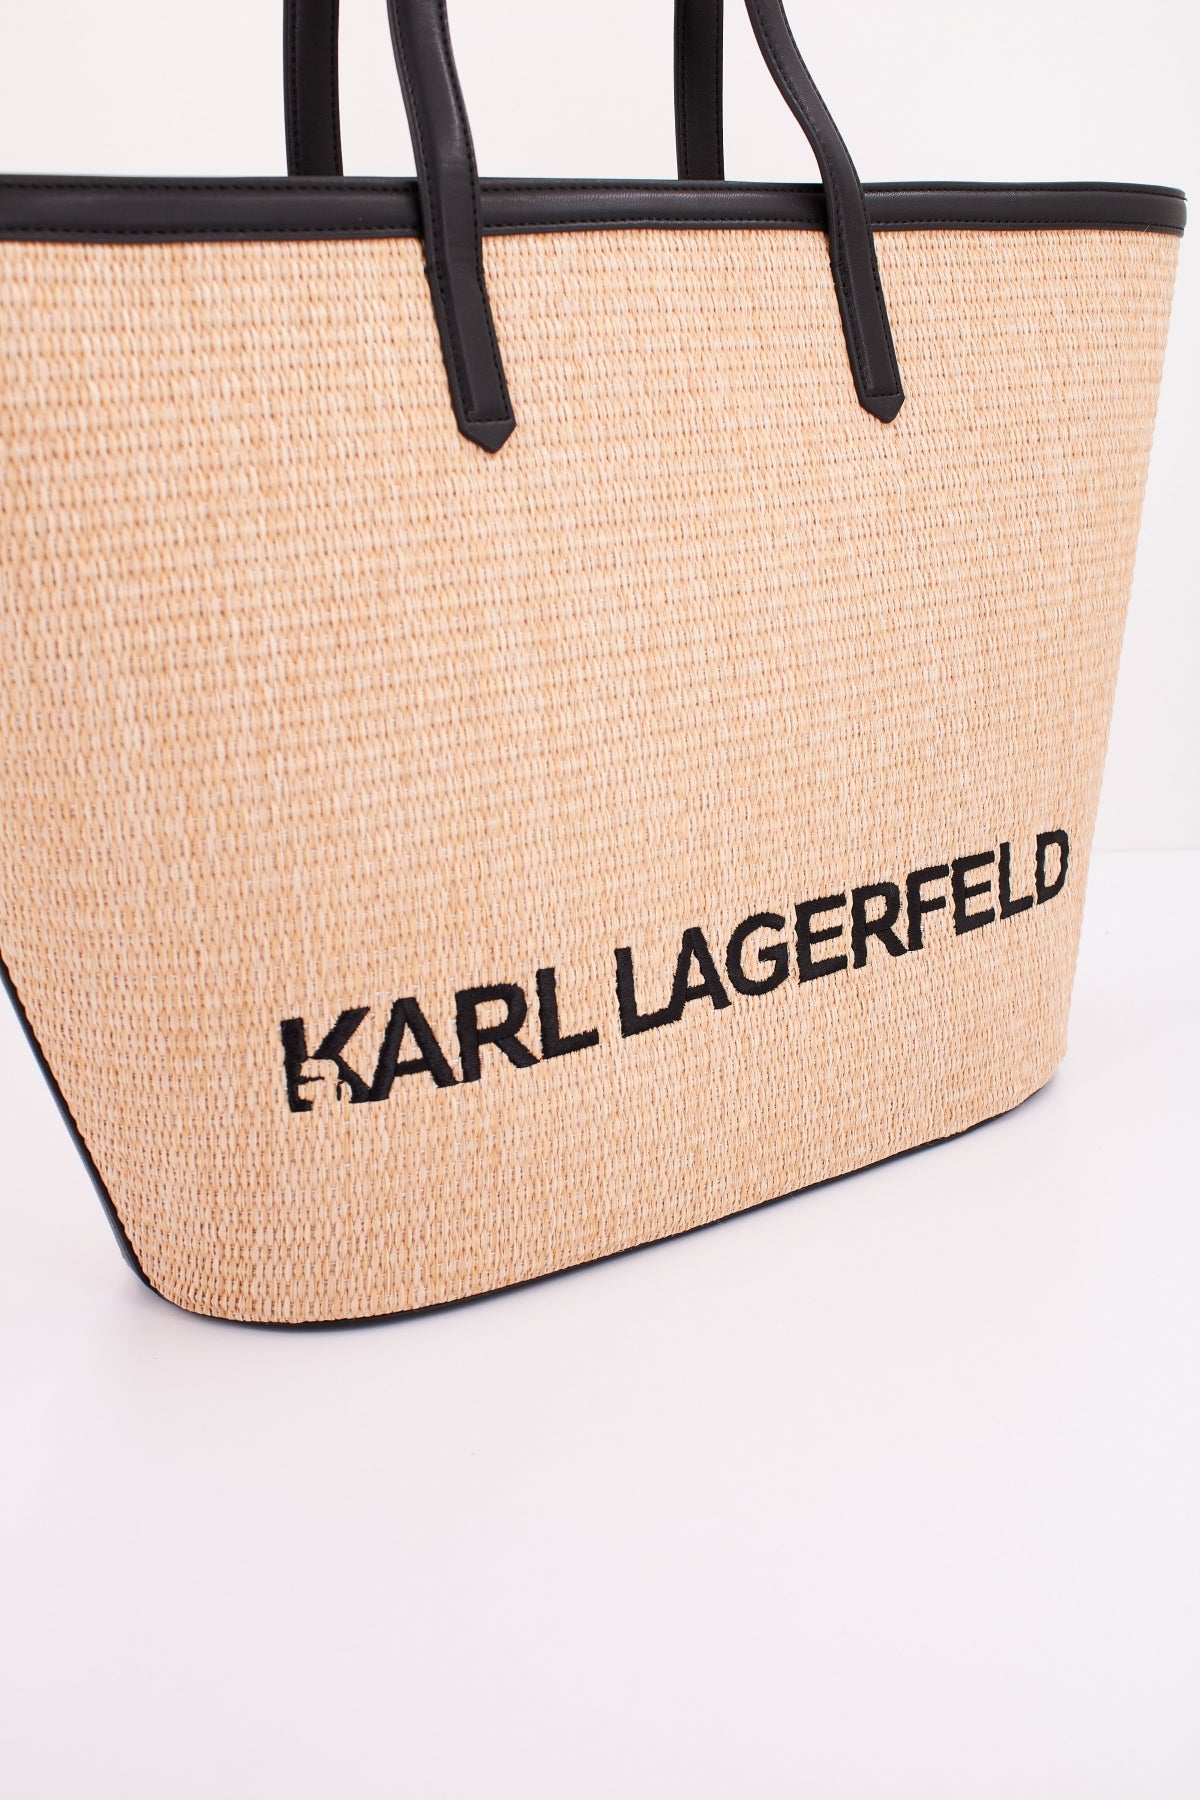 KARL LAGERFELD K/ESSENTIAL RAFFIA TOTE en color MARRON CLARO  (4)